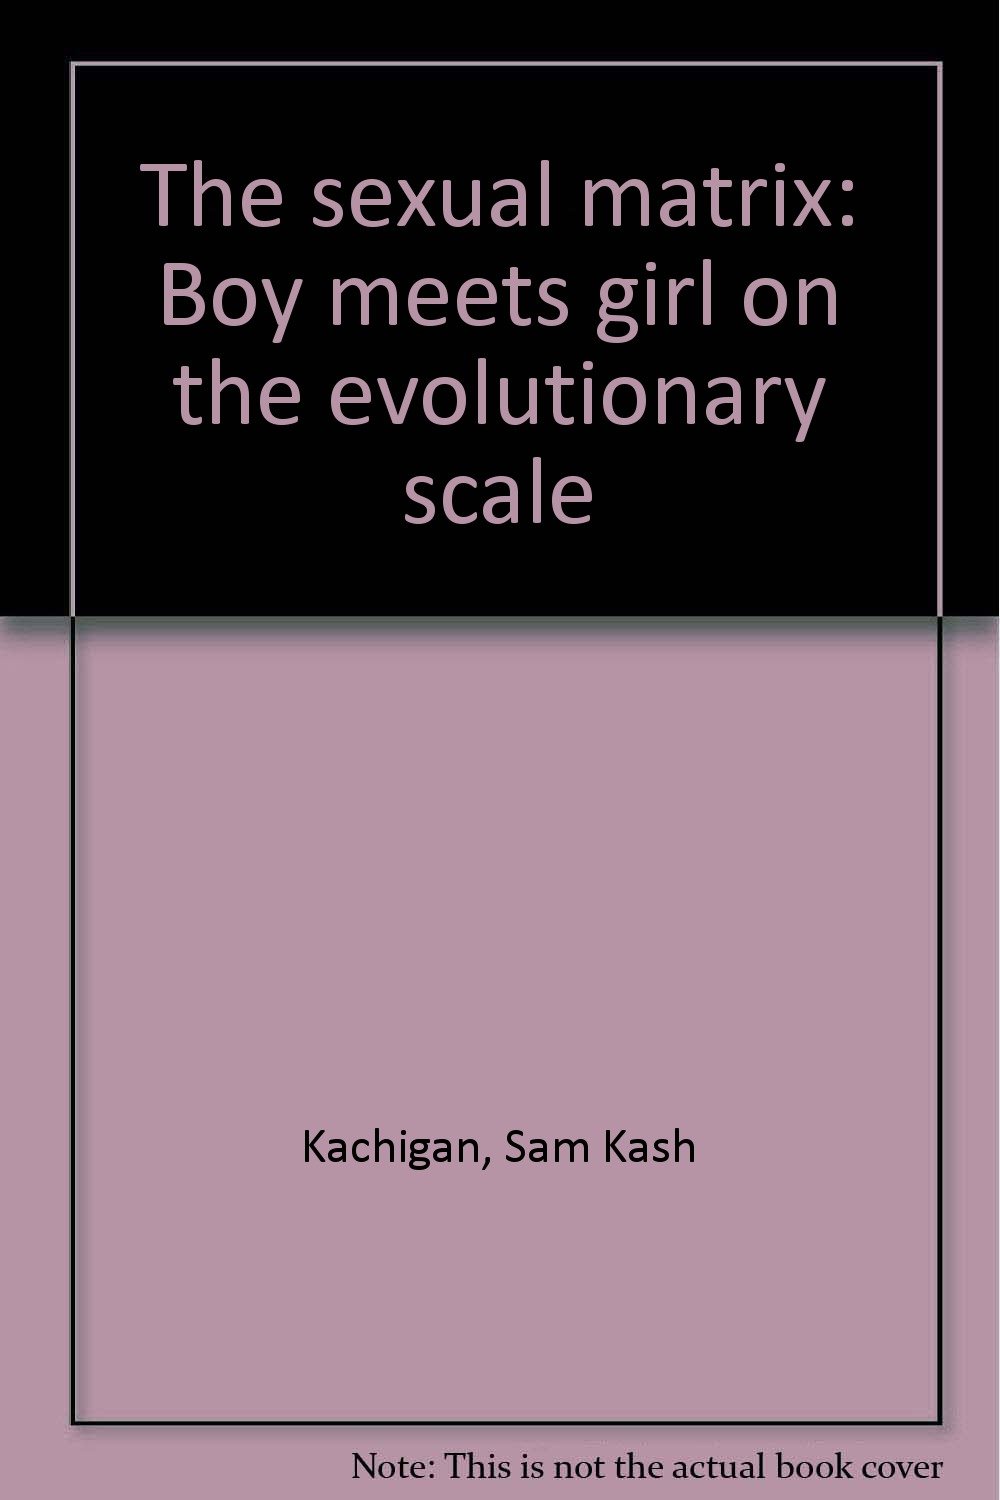 The sexual matrix book written by Sam Kash Kachigan